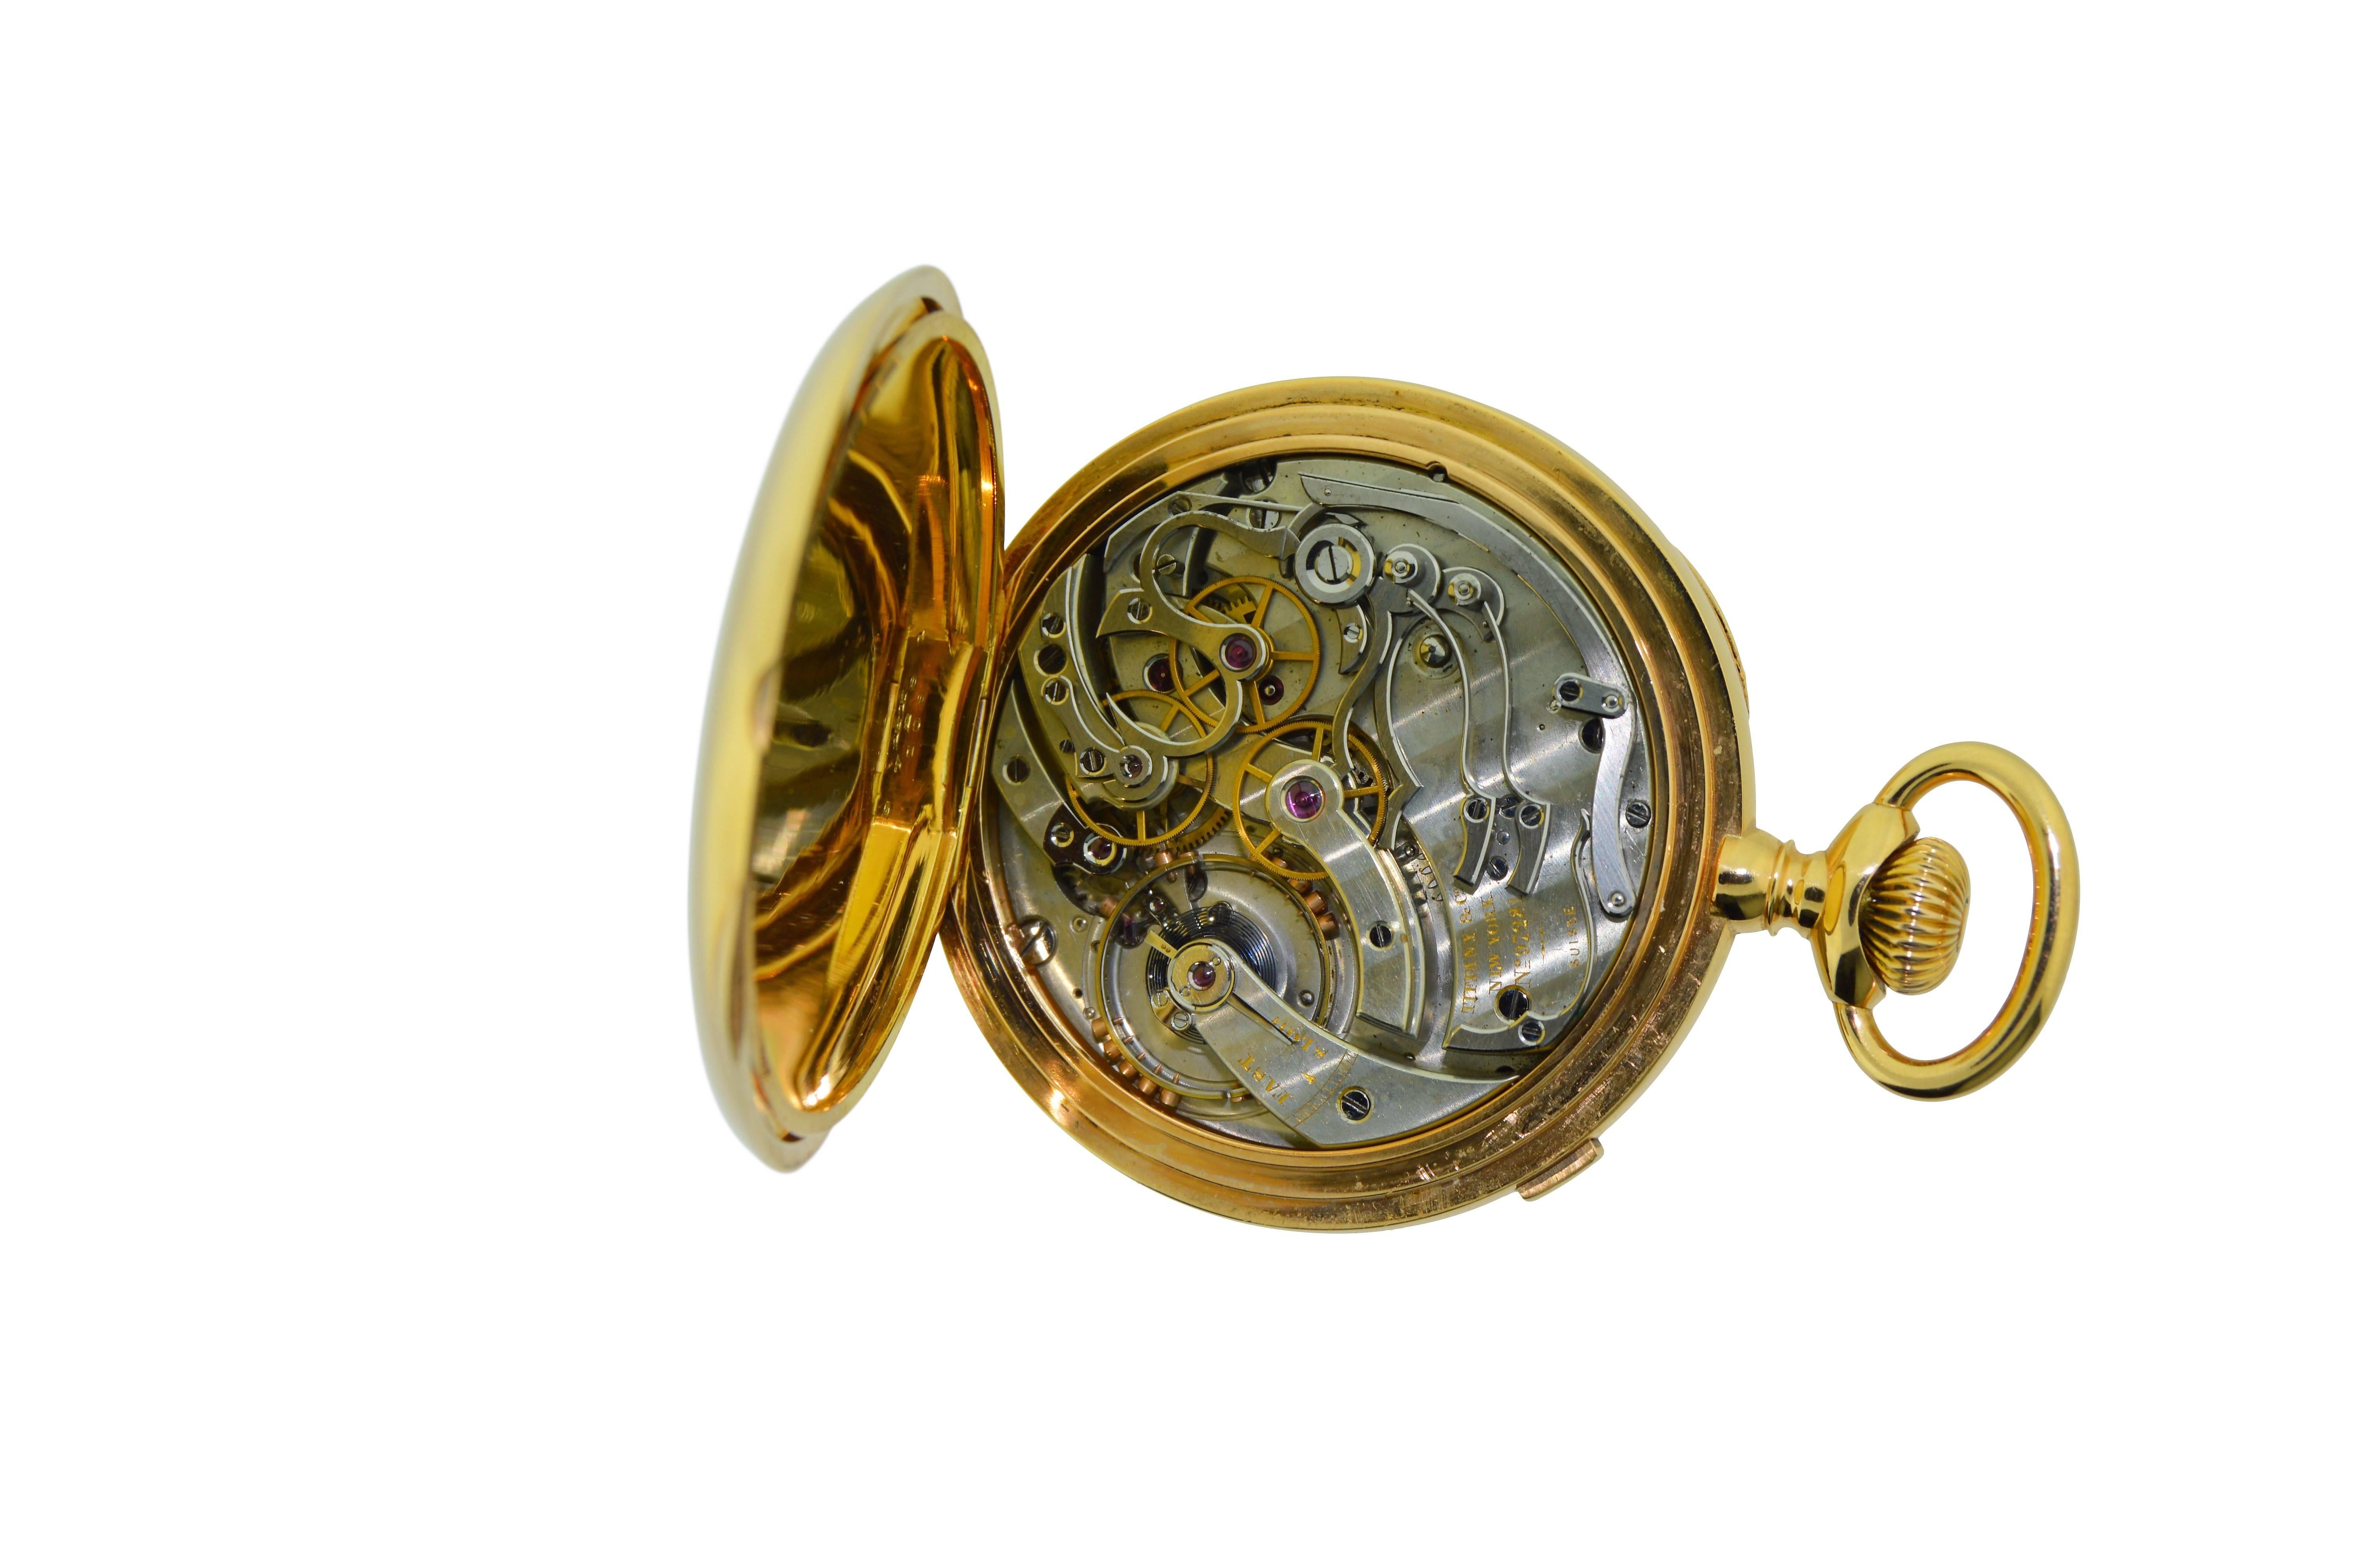 patek philippe split second chronograph pocket watch